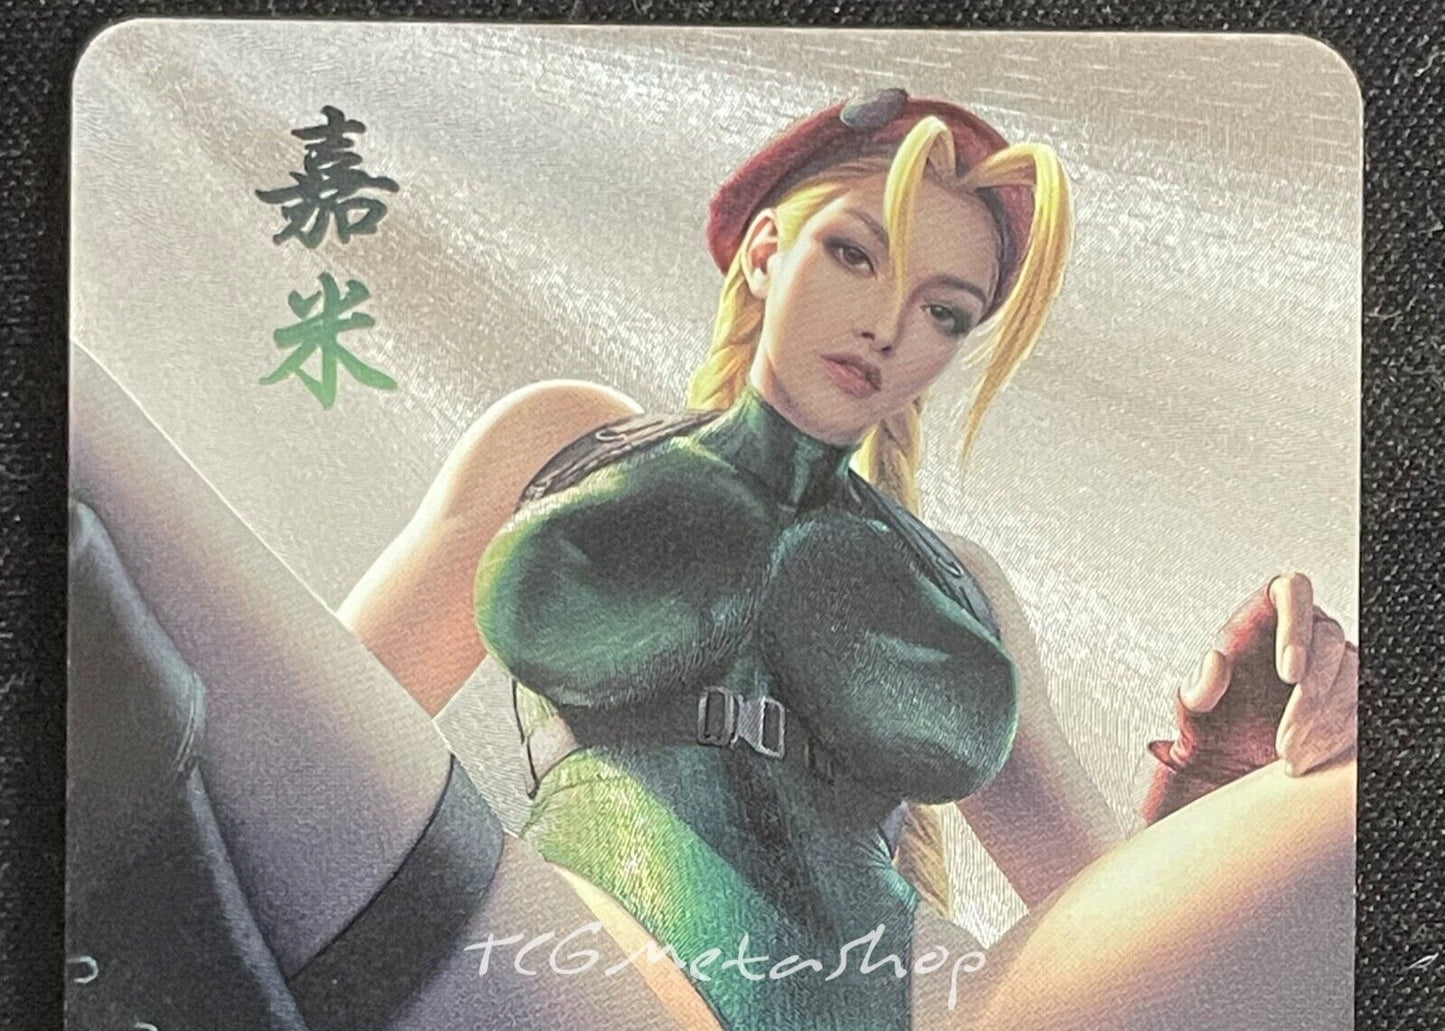 🔥 Cammy Street Fighter Goddess Story Anime Waifu Card ACG DUAL 1212 🔥